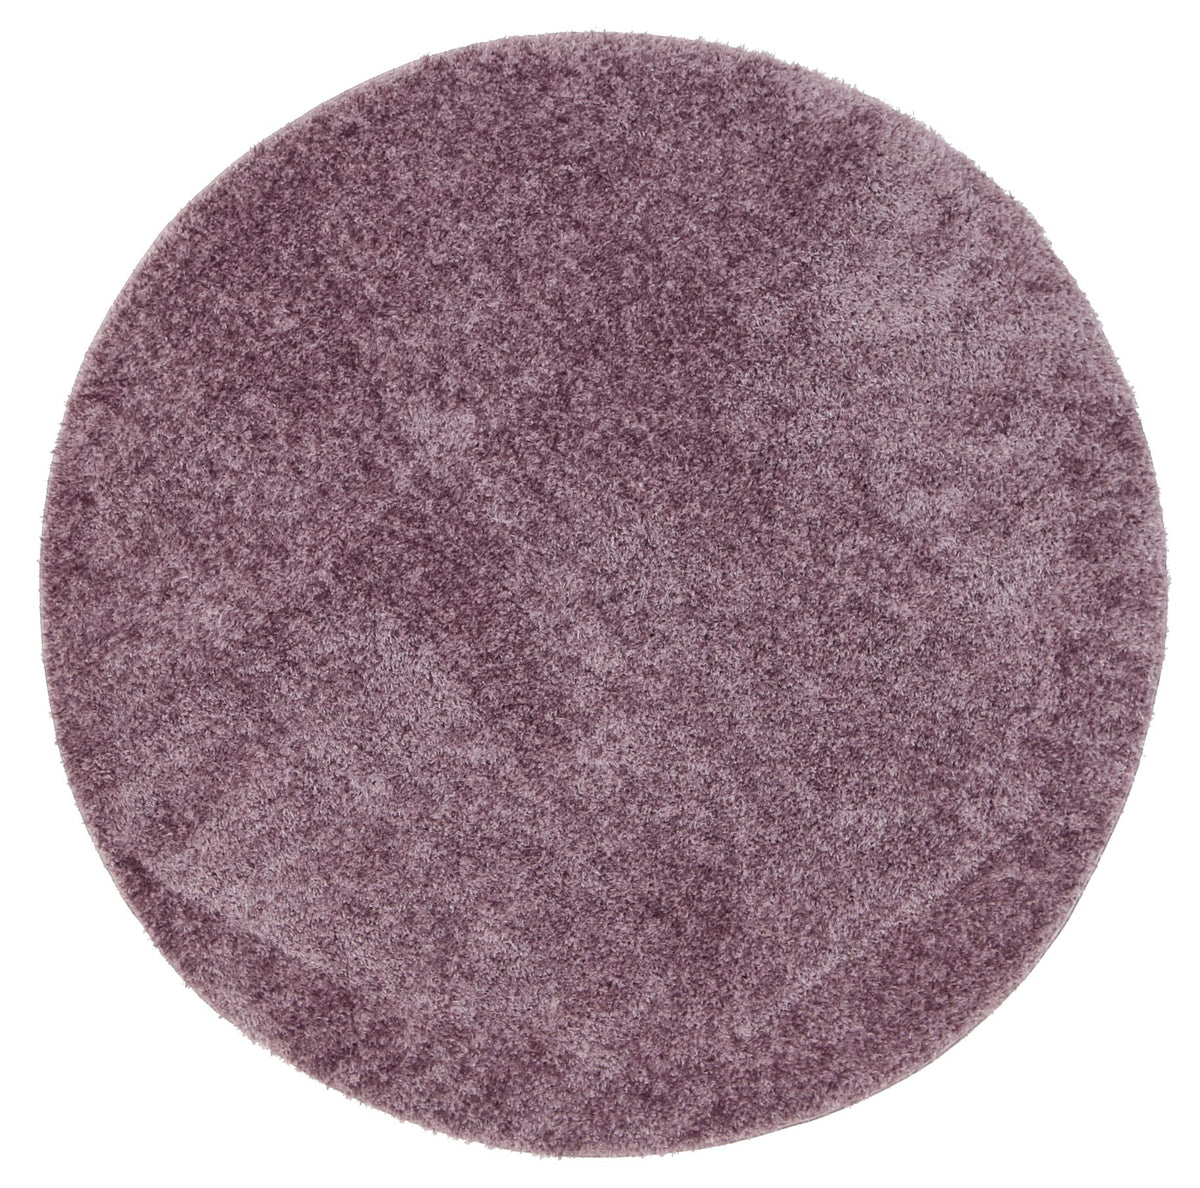 Puffy Soft Shaggy Lilac Purple